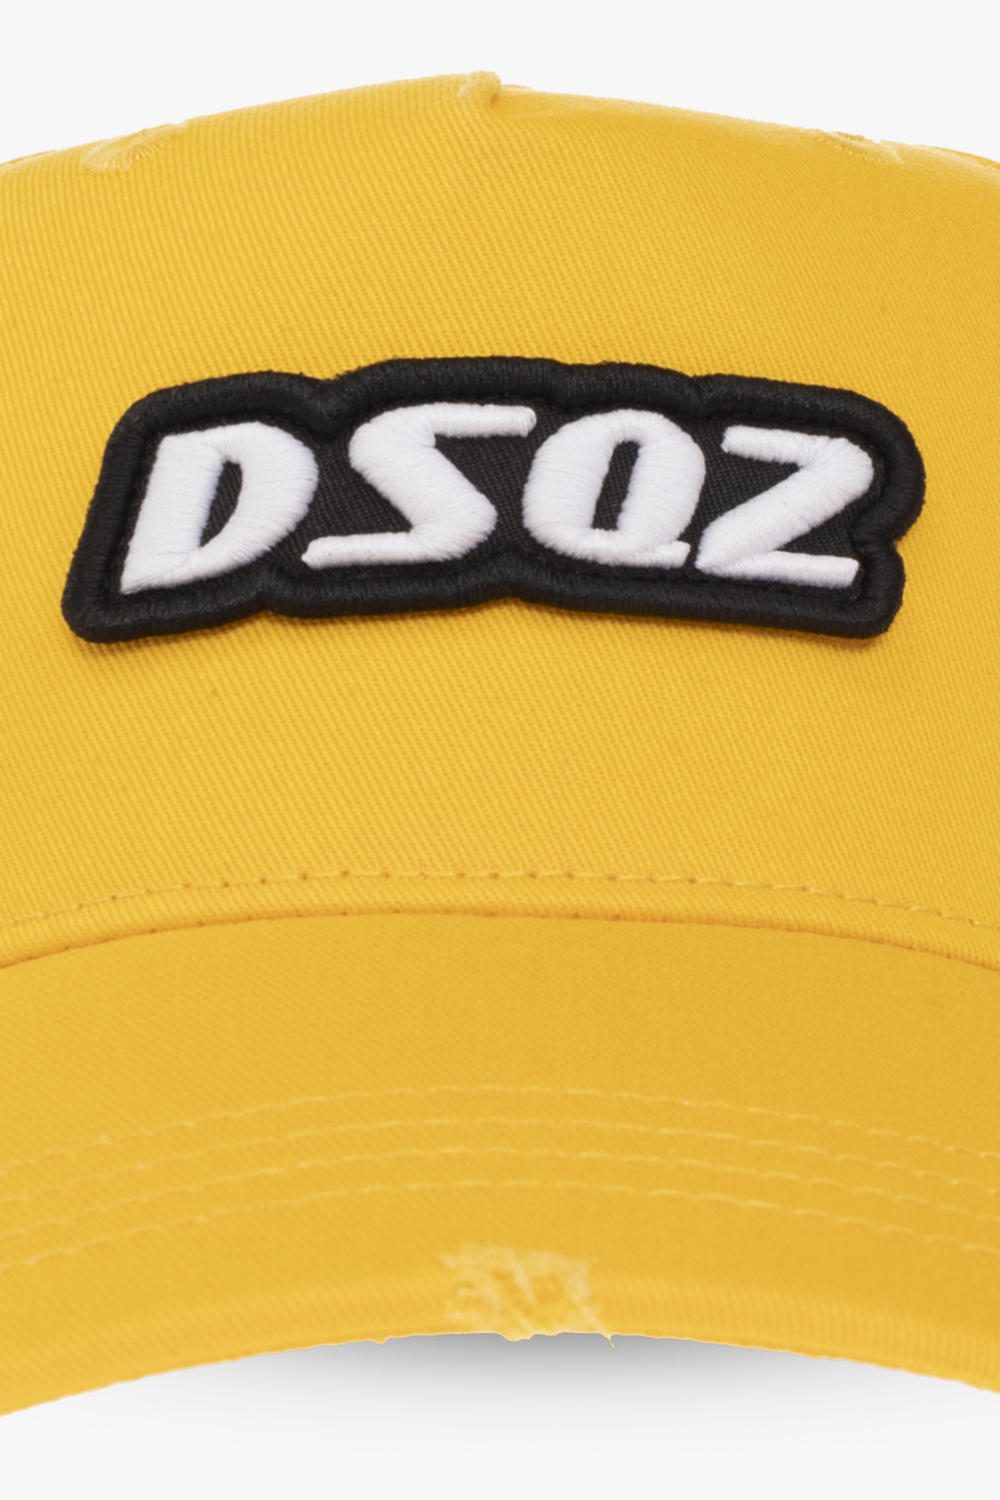 Dsquared2 Adult Vortex Boundary Horizon Adjustable Hat